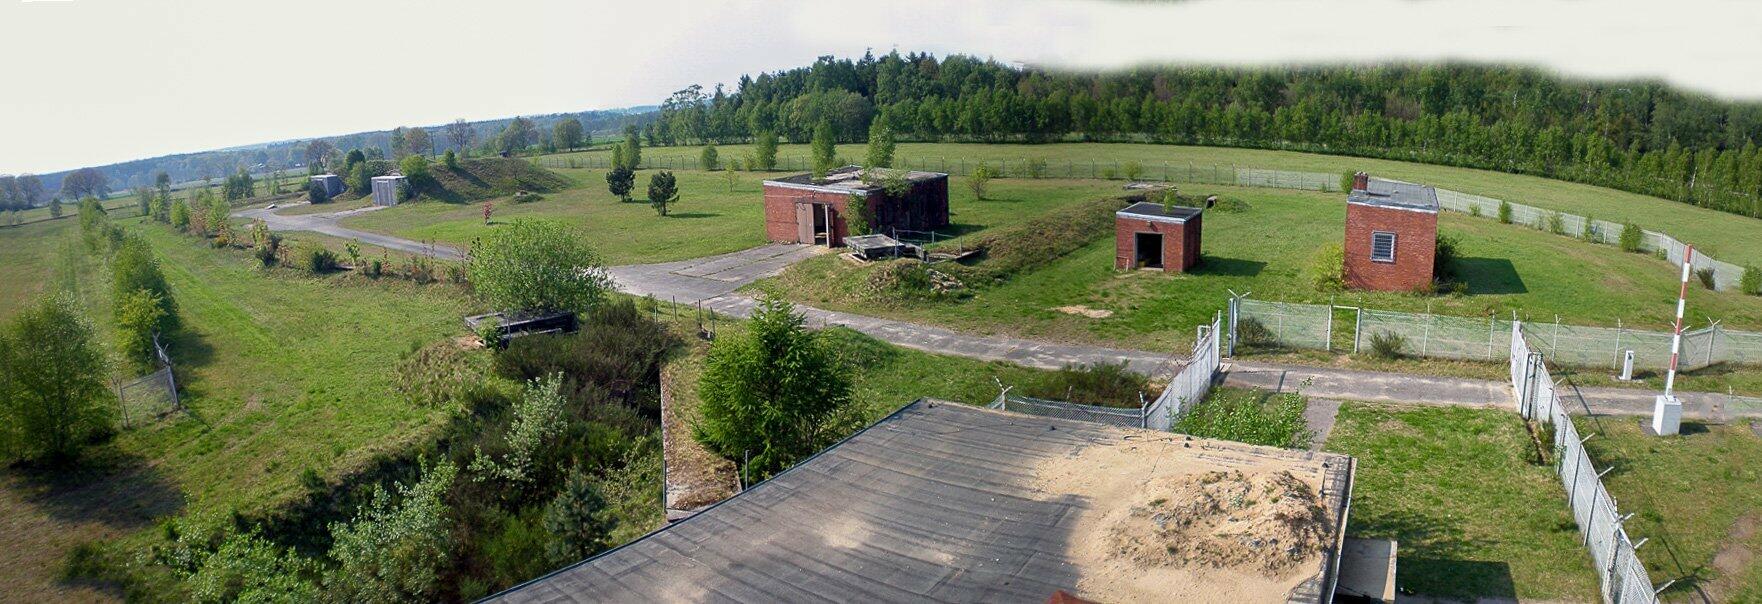 Luftbild des Sondermunitionslagers Kellinghusen (2010 - Sören Kuhrt)